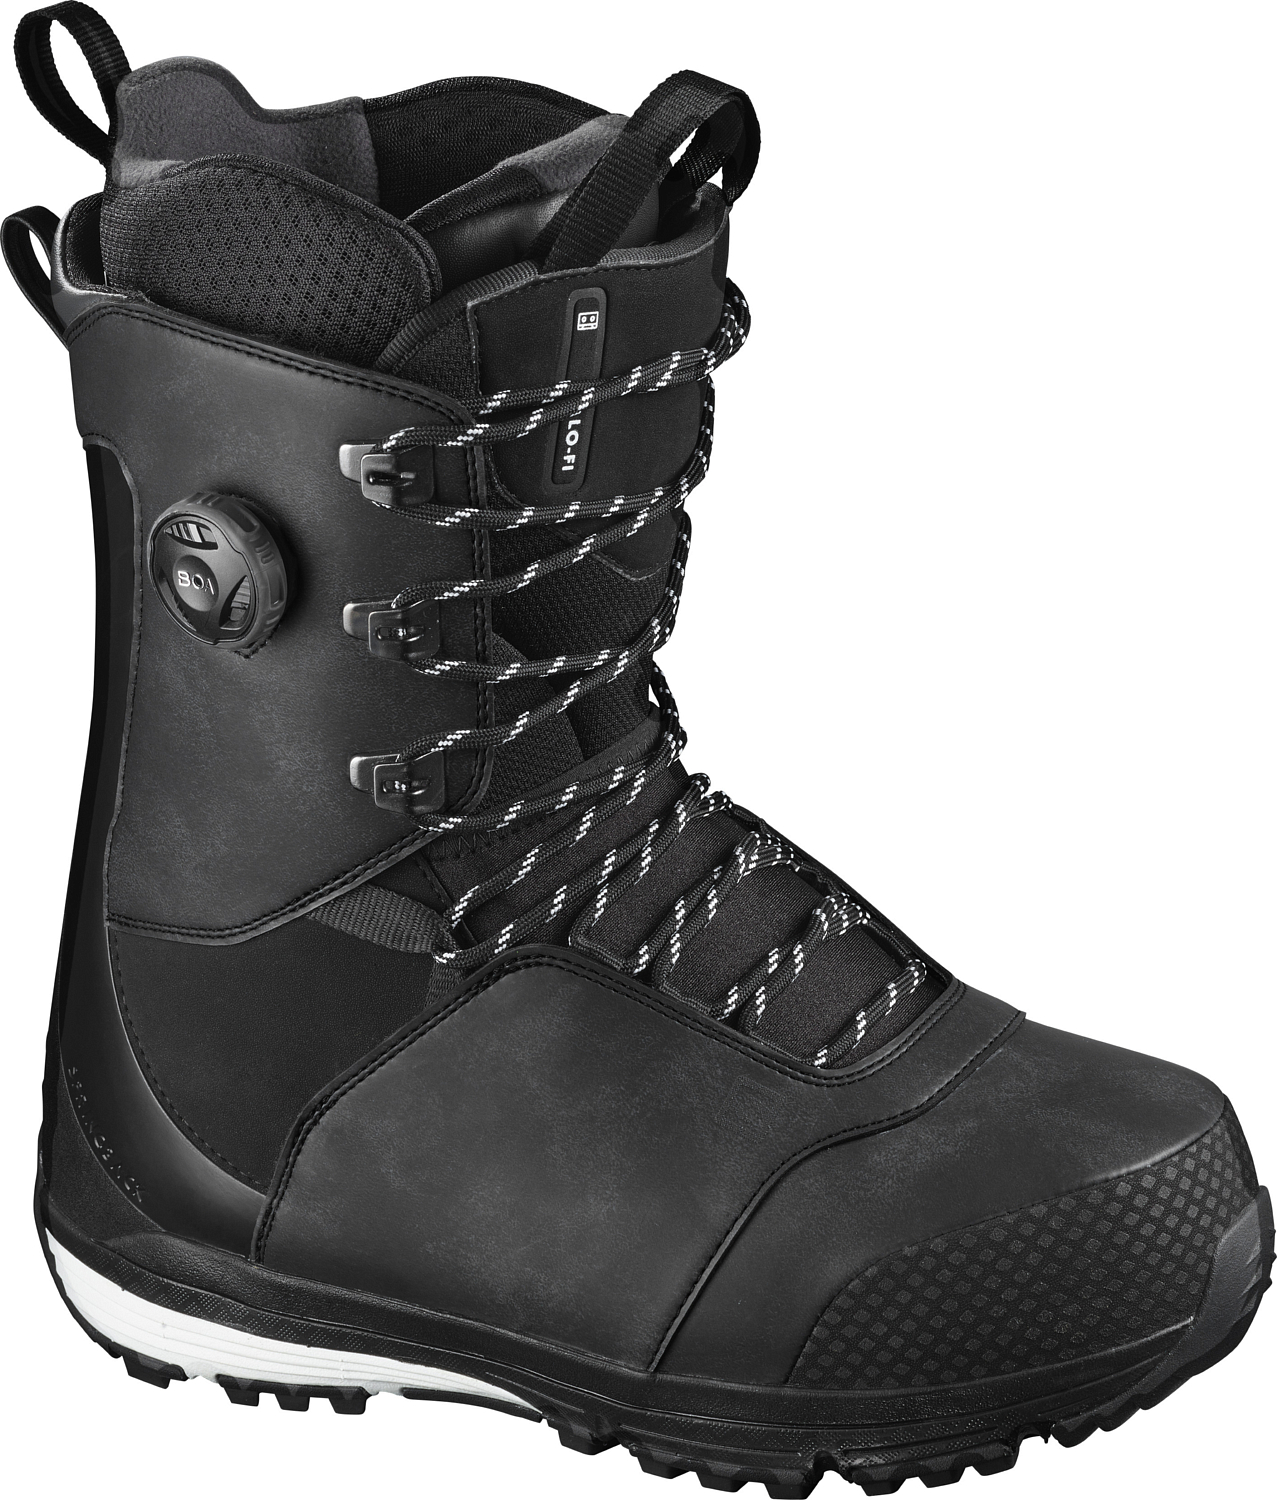 Ботинки для сноуборда SALOMON 2020-21 Lo-Fi Black/Asphalt/Castelrock